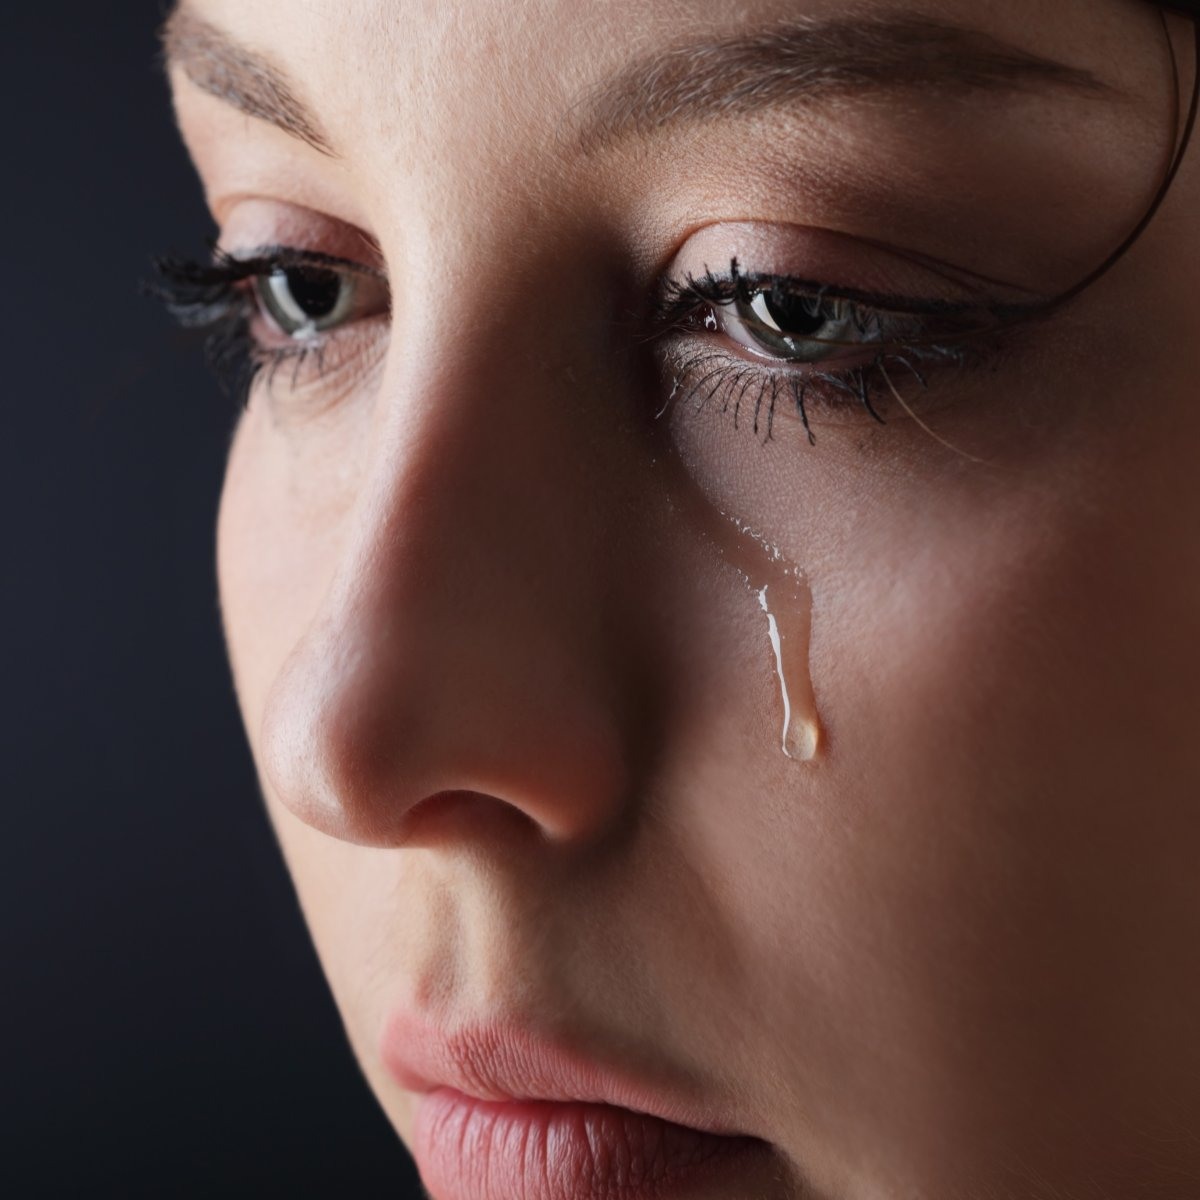 Плачущая женщина фото